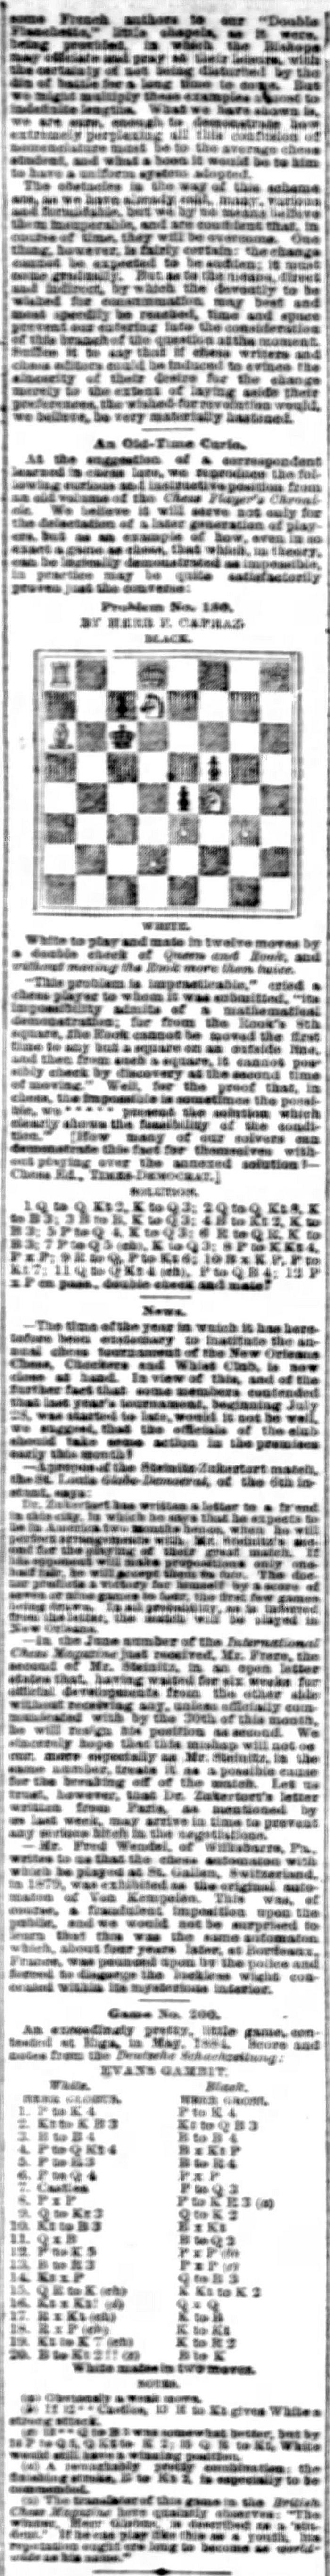 1885.06.14-02 New Orleans Times-Democrat.jpg